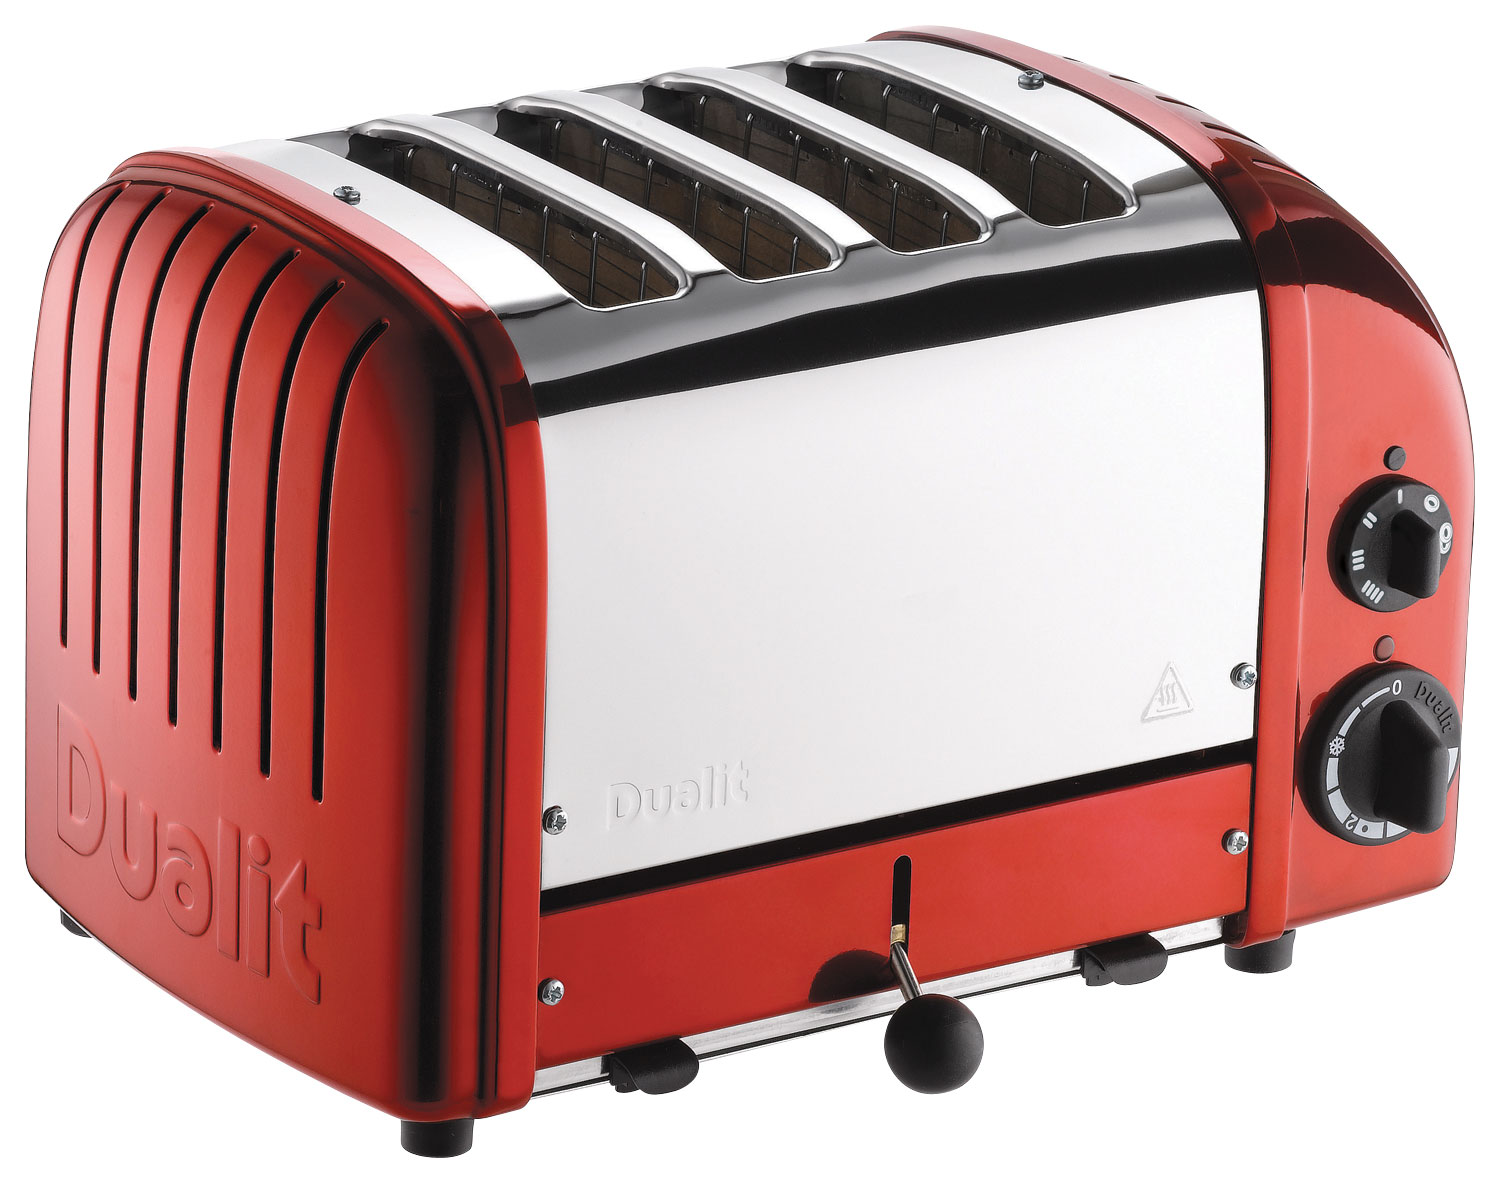 Dualit NewGen 4-Slice Wide-Slot Toaster Apple Candy Red 47171 - Best Buy